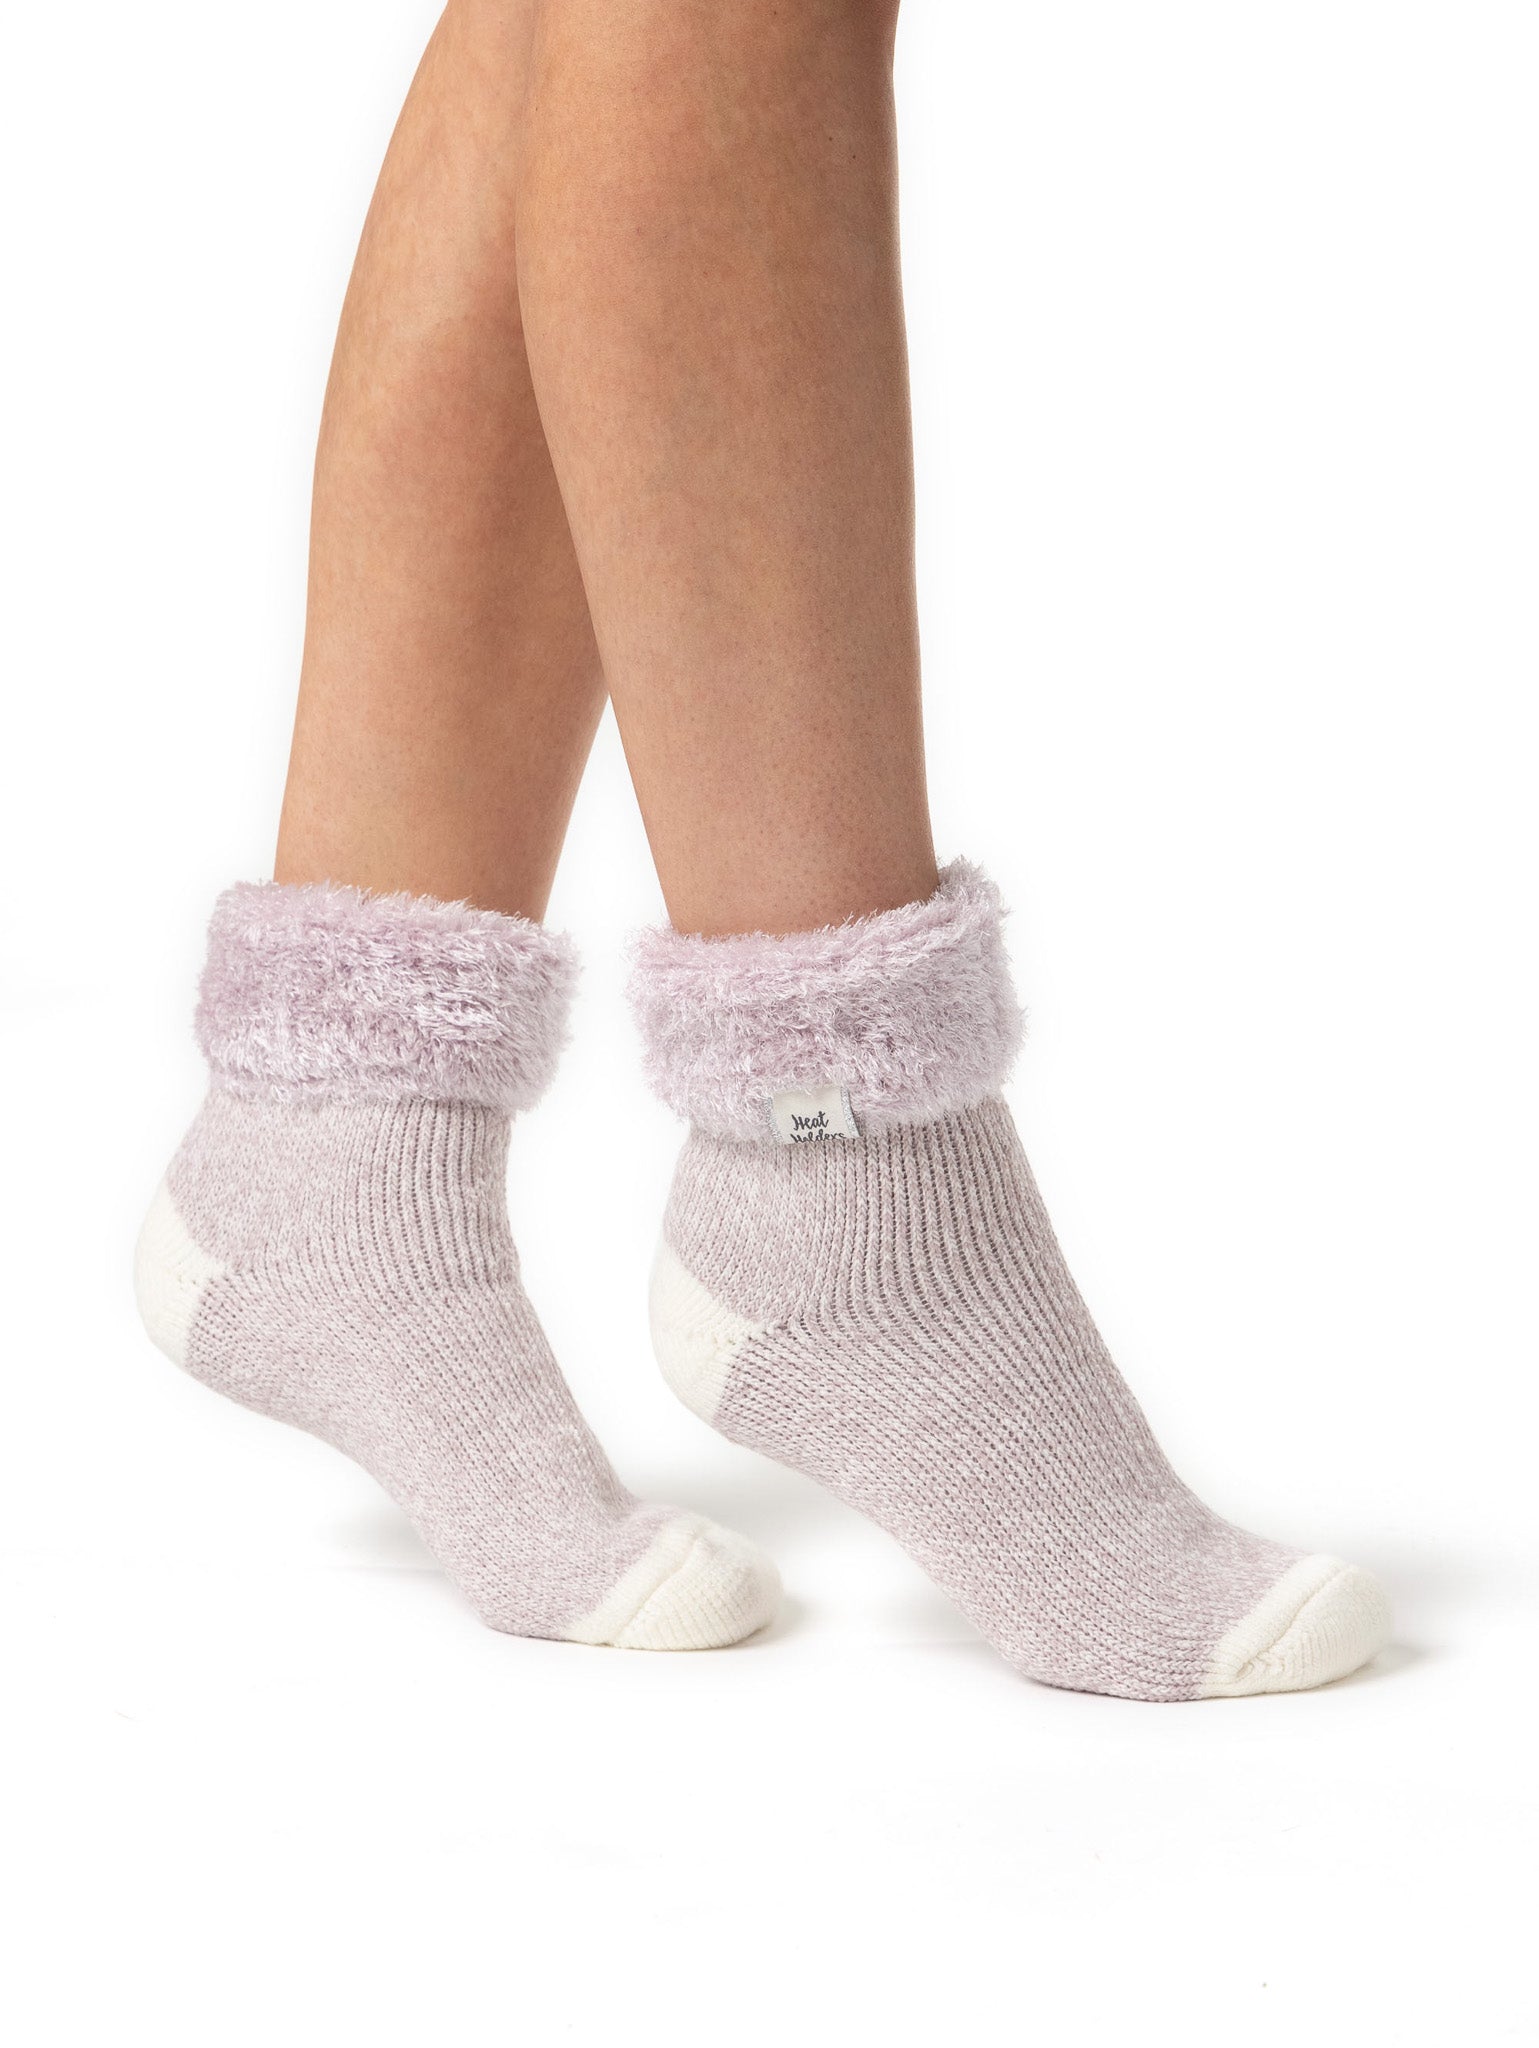 HEAT HOLDERS Feather Cuff Sleep Socks - Women's Bigfoot